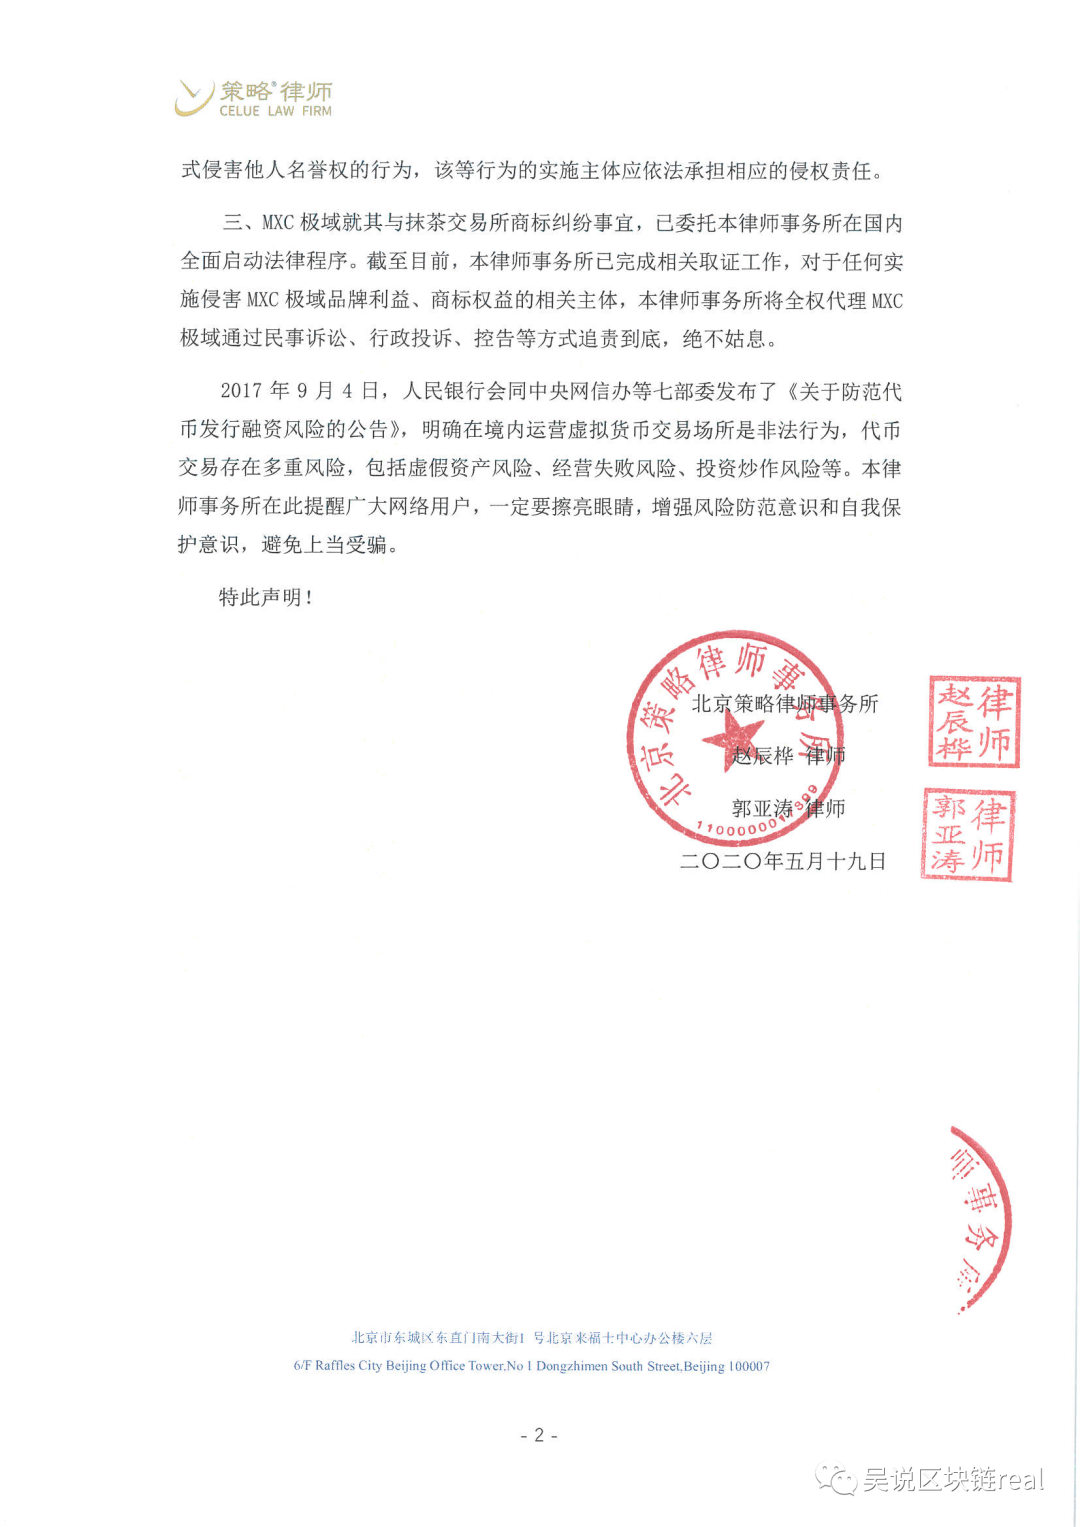 MXC极域拟北京起诉抹茶交易所 涉商标纠纷